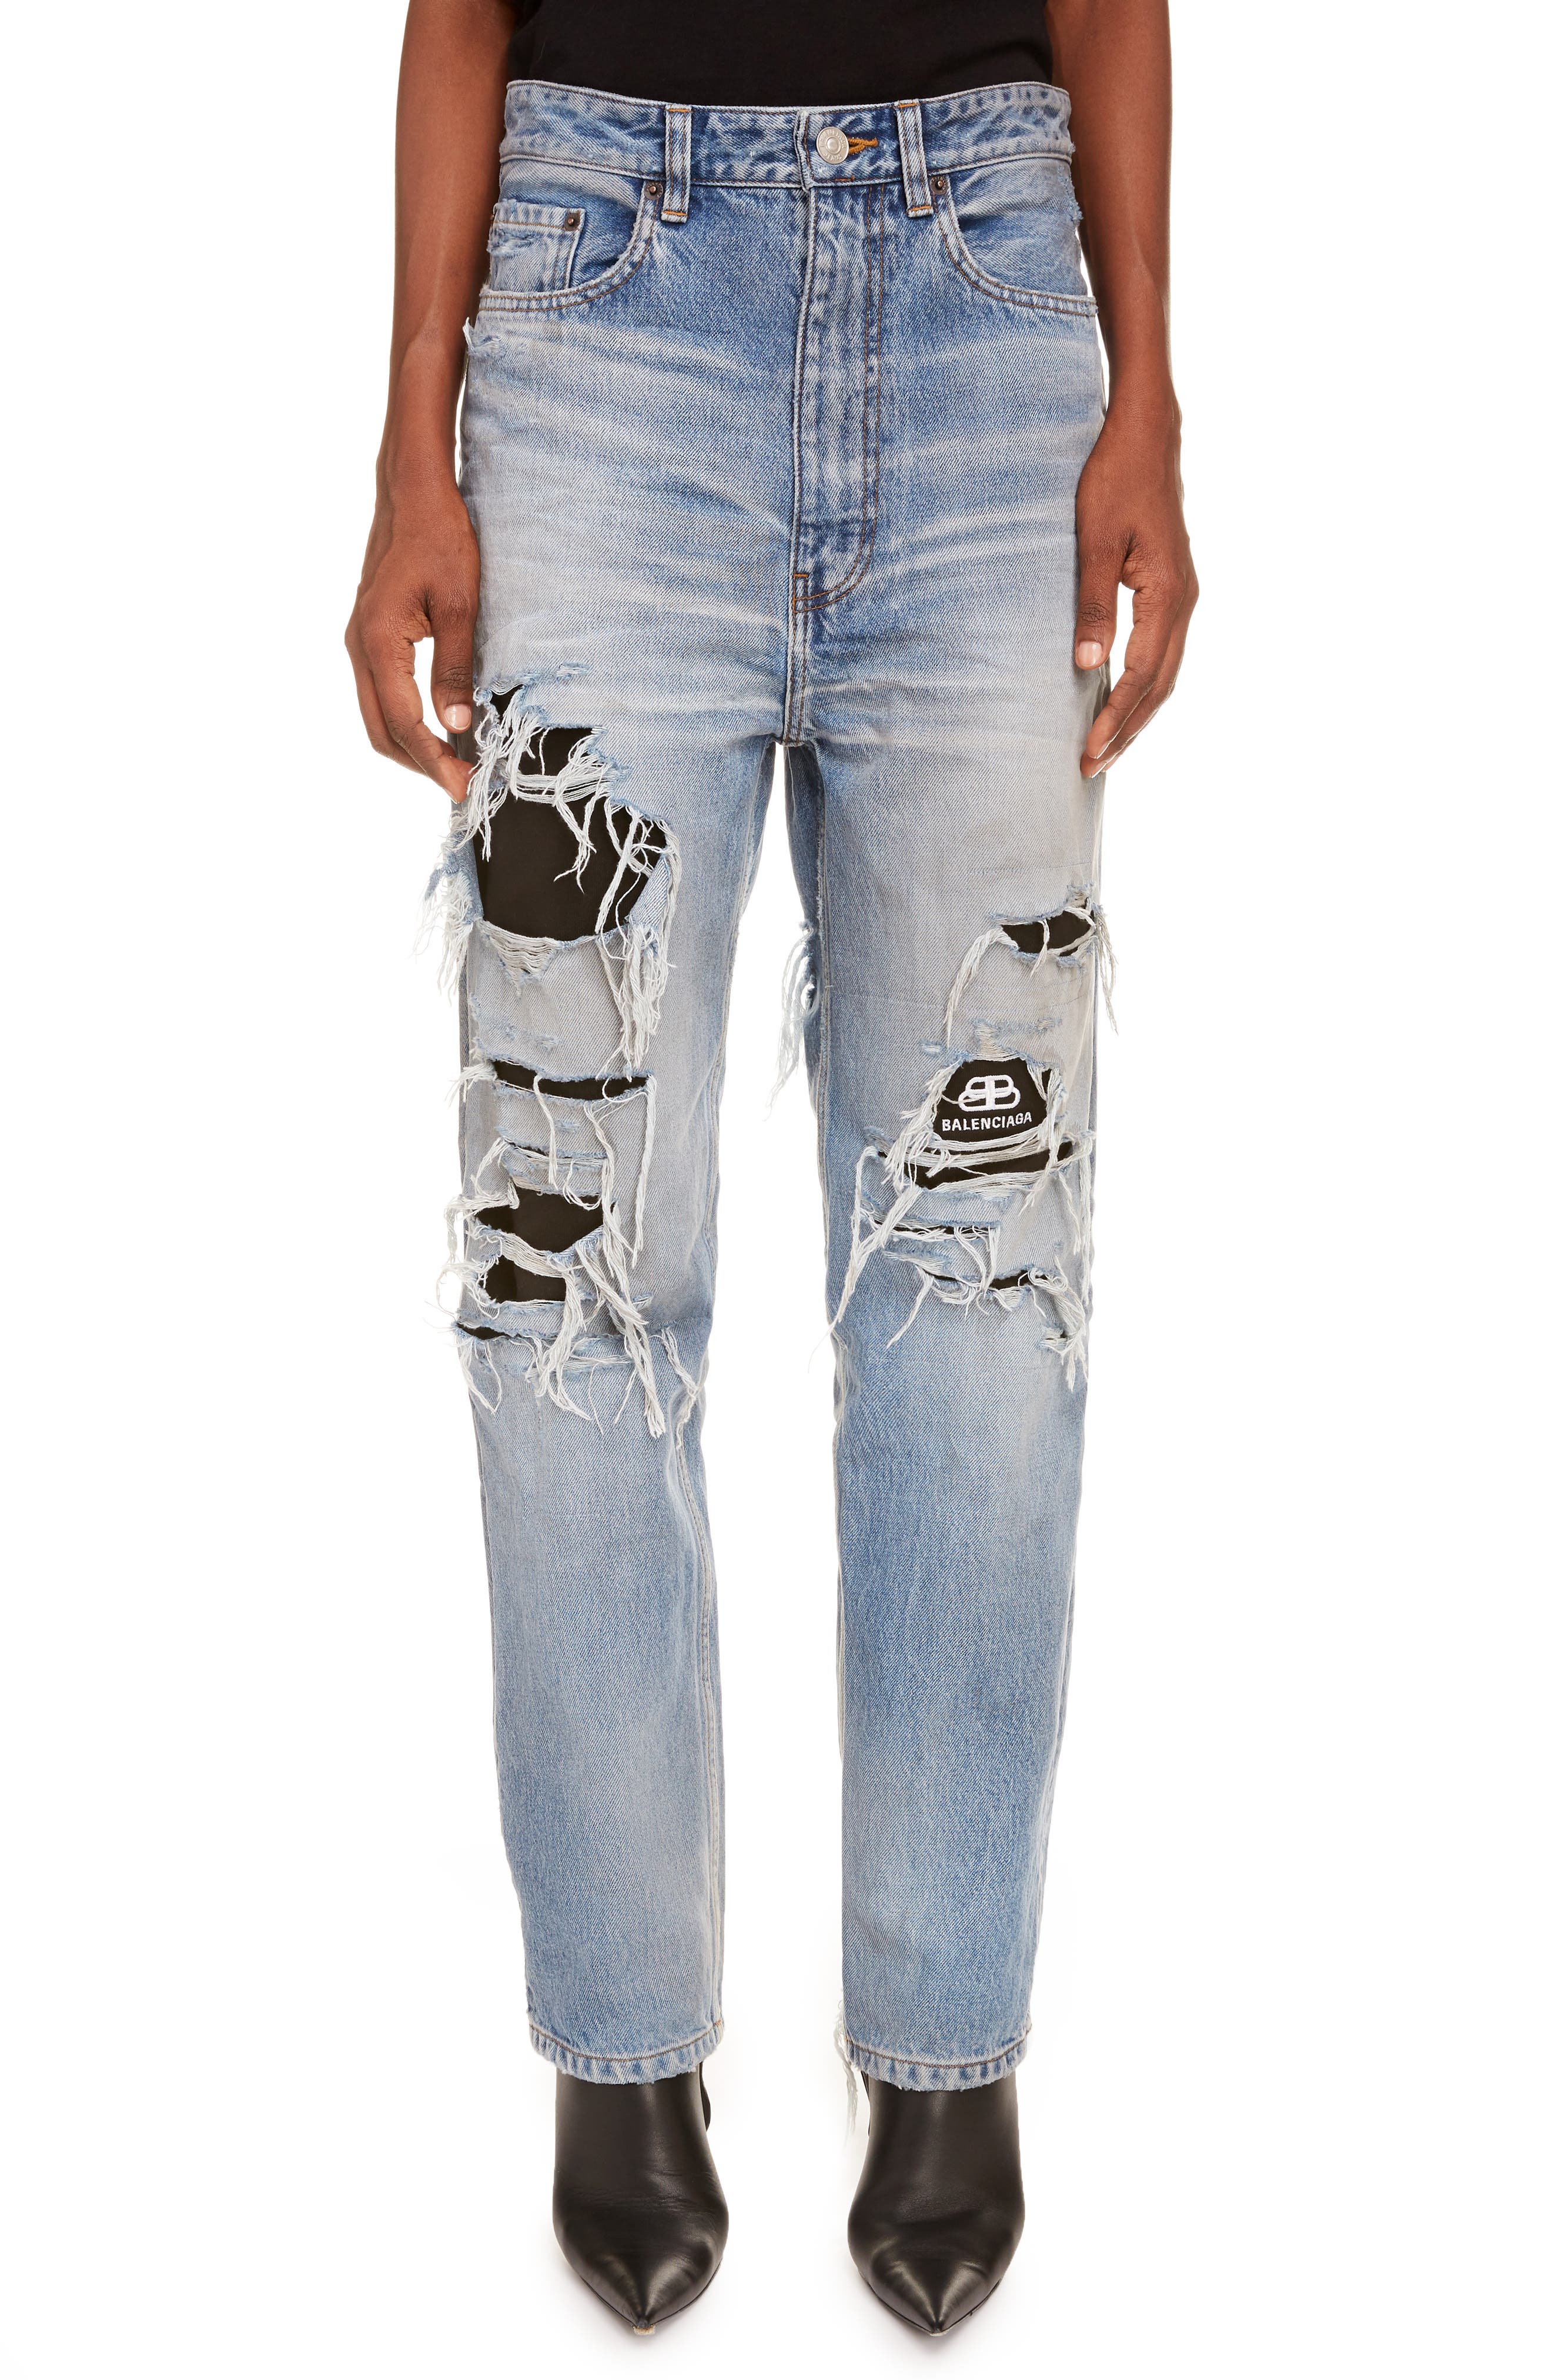 balenciaga distressed jeans